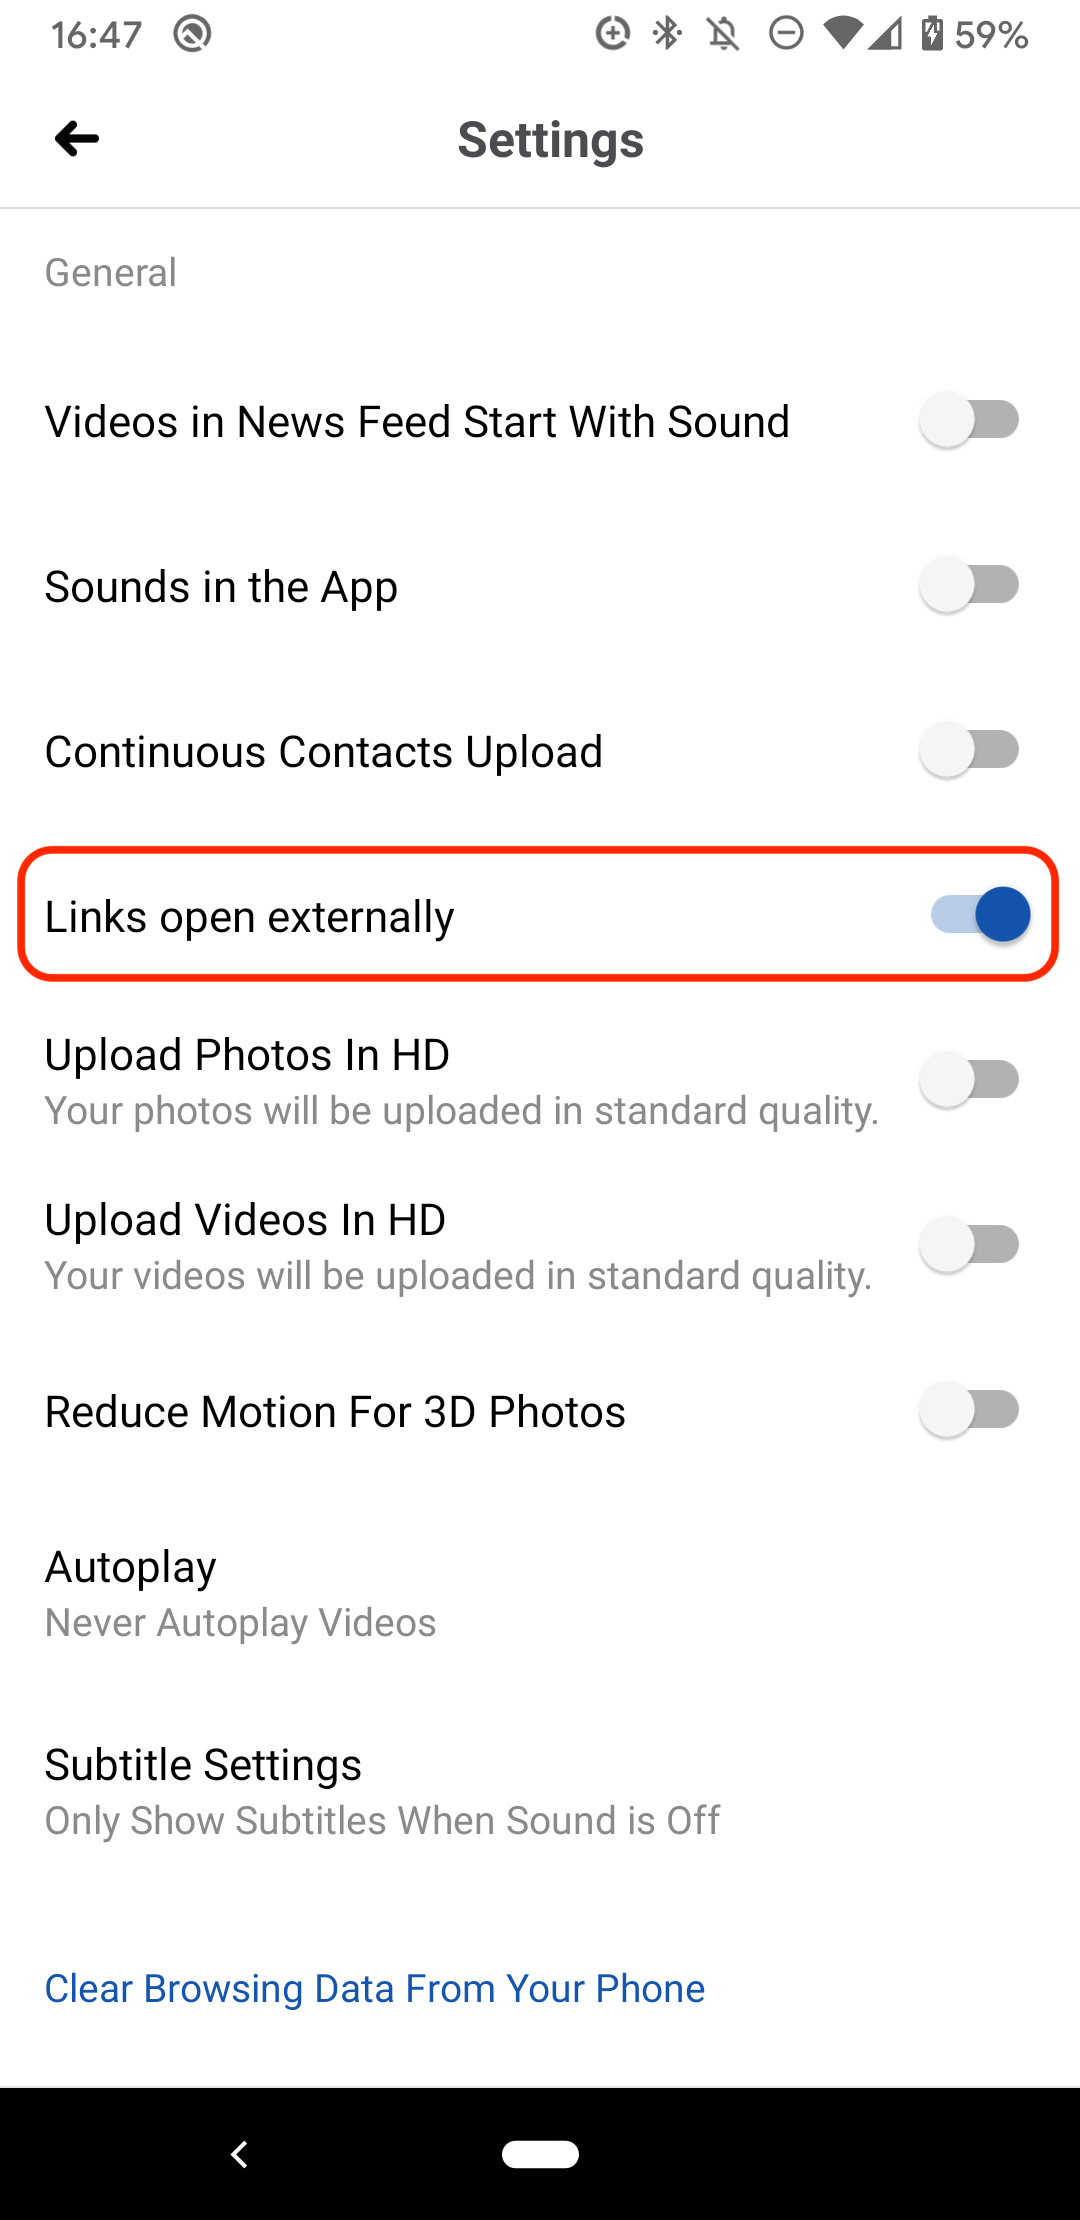 Facebook Settings option: "Links open externally"